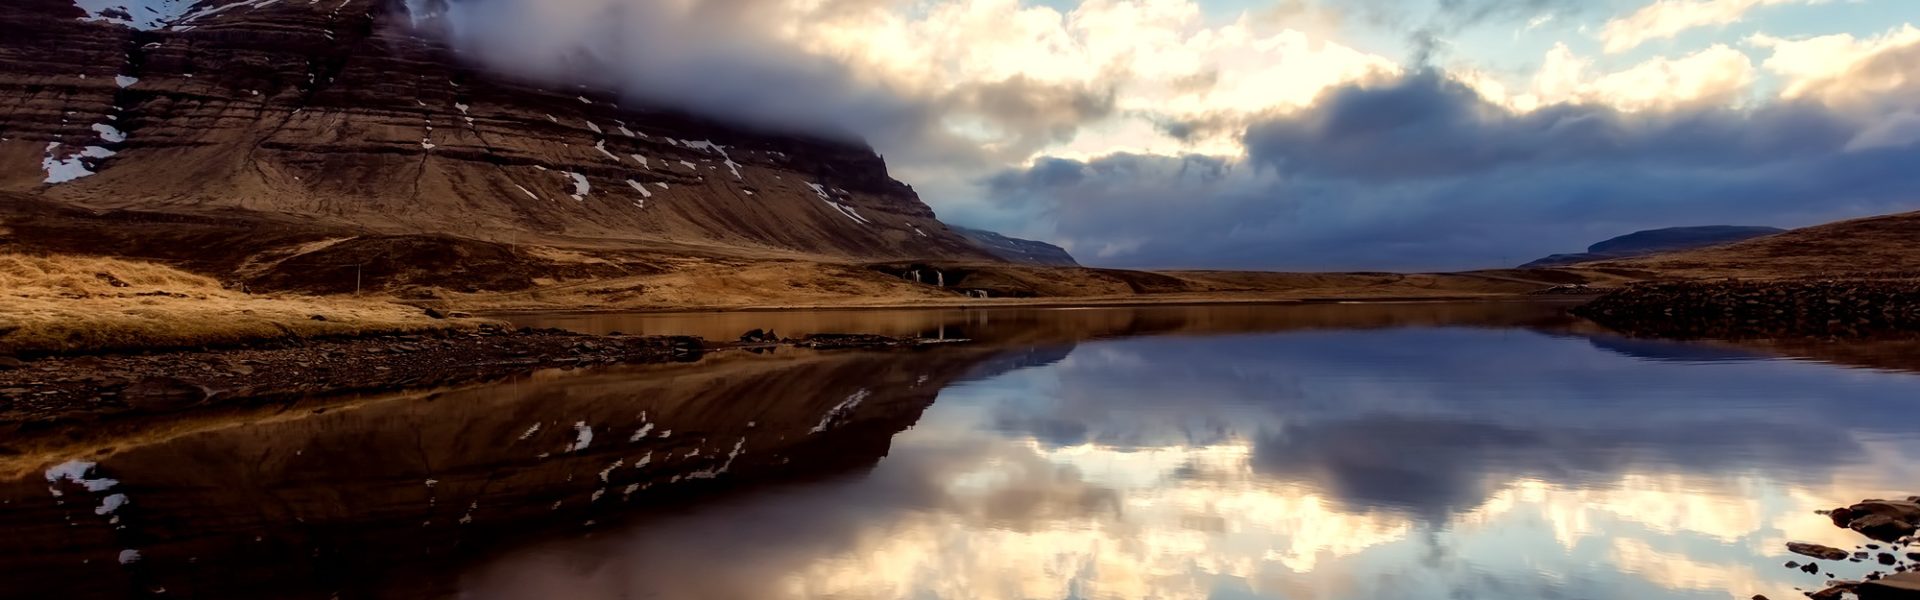 Our Top Ten Destinations Bucket List #5: Iceland